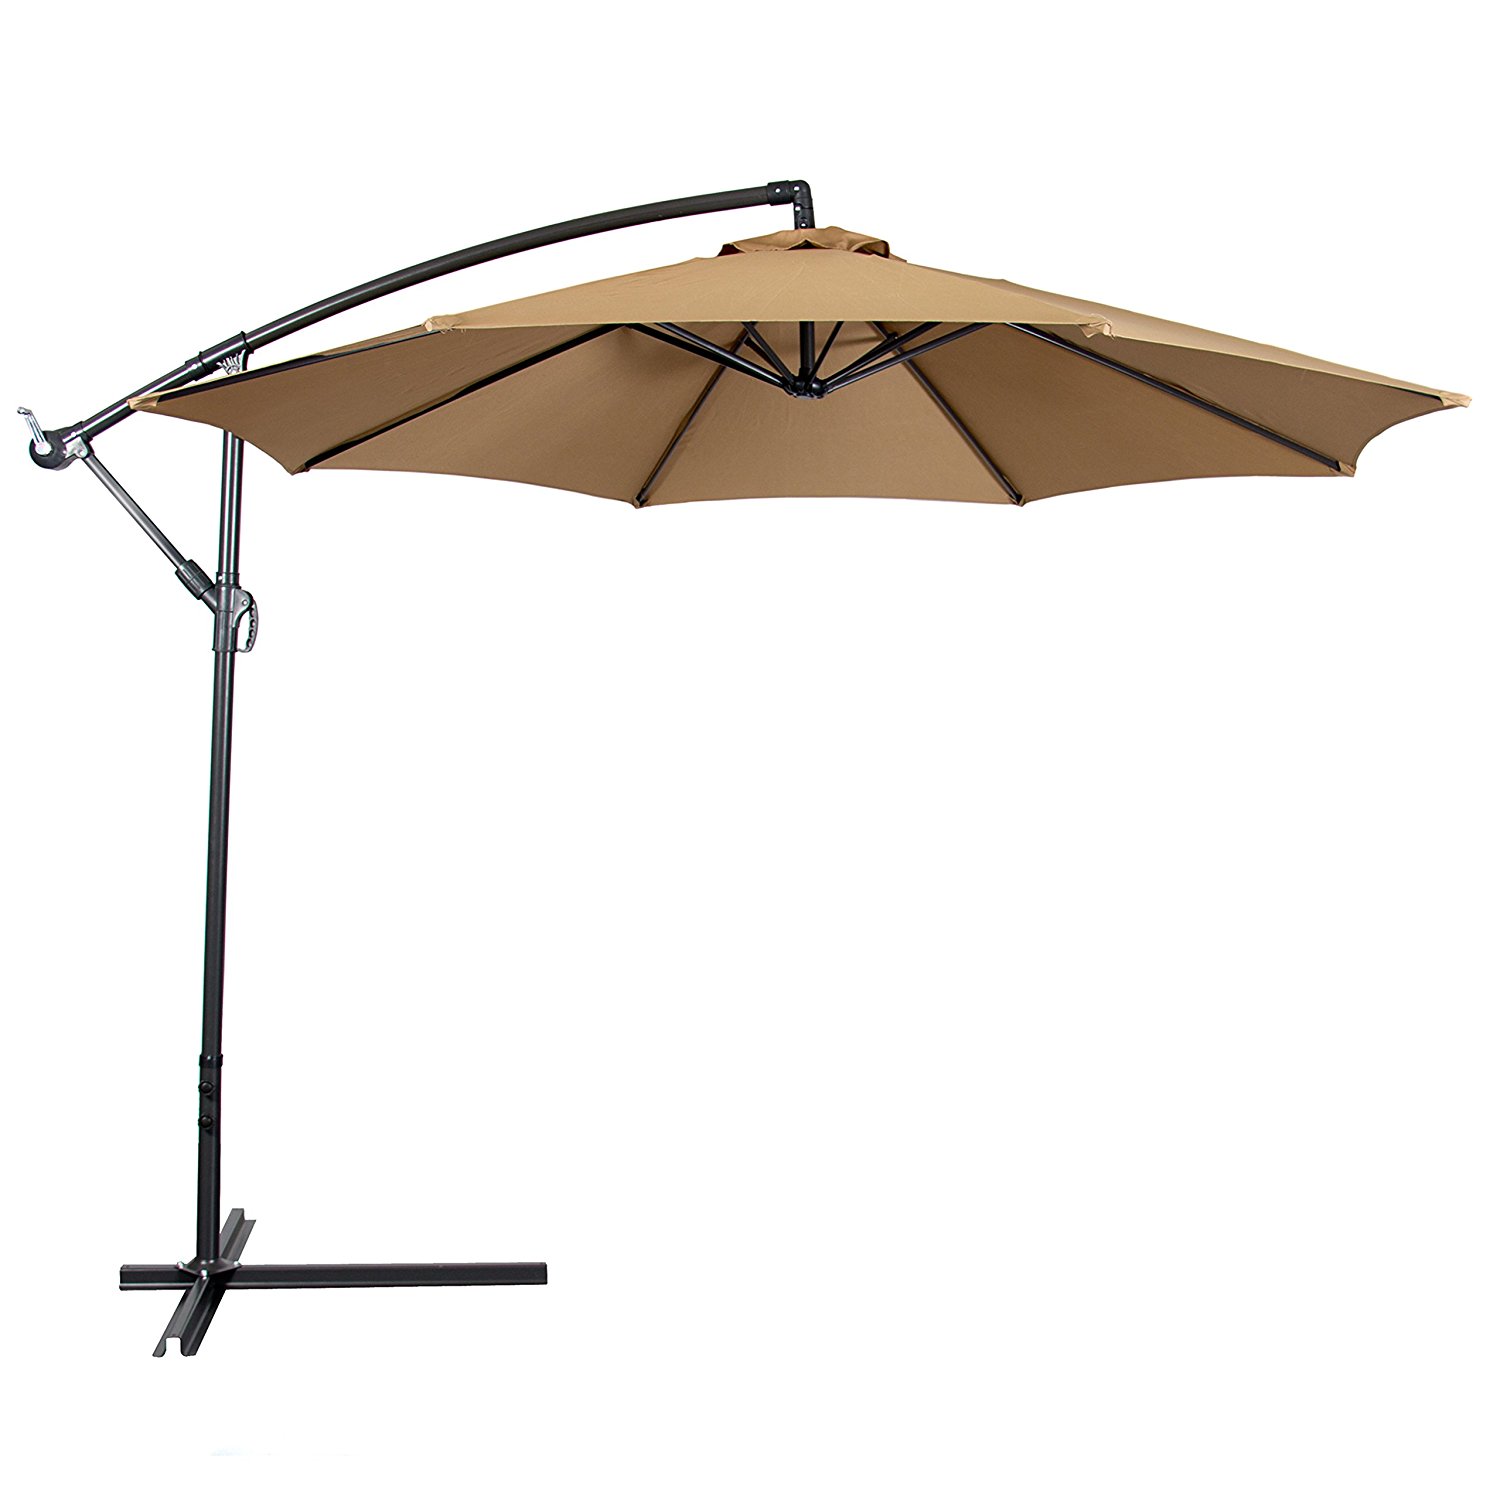 patio umbrellas amazon.com : best choice products offset 10u0027 hanging outdoor market new tan patio  umbrella, beige : JZNIMOD